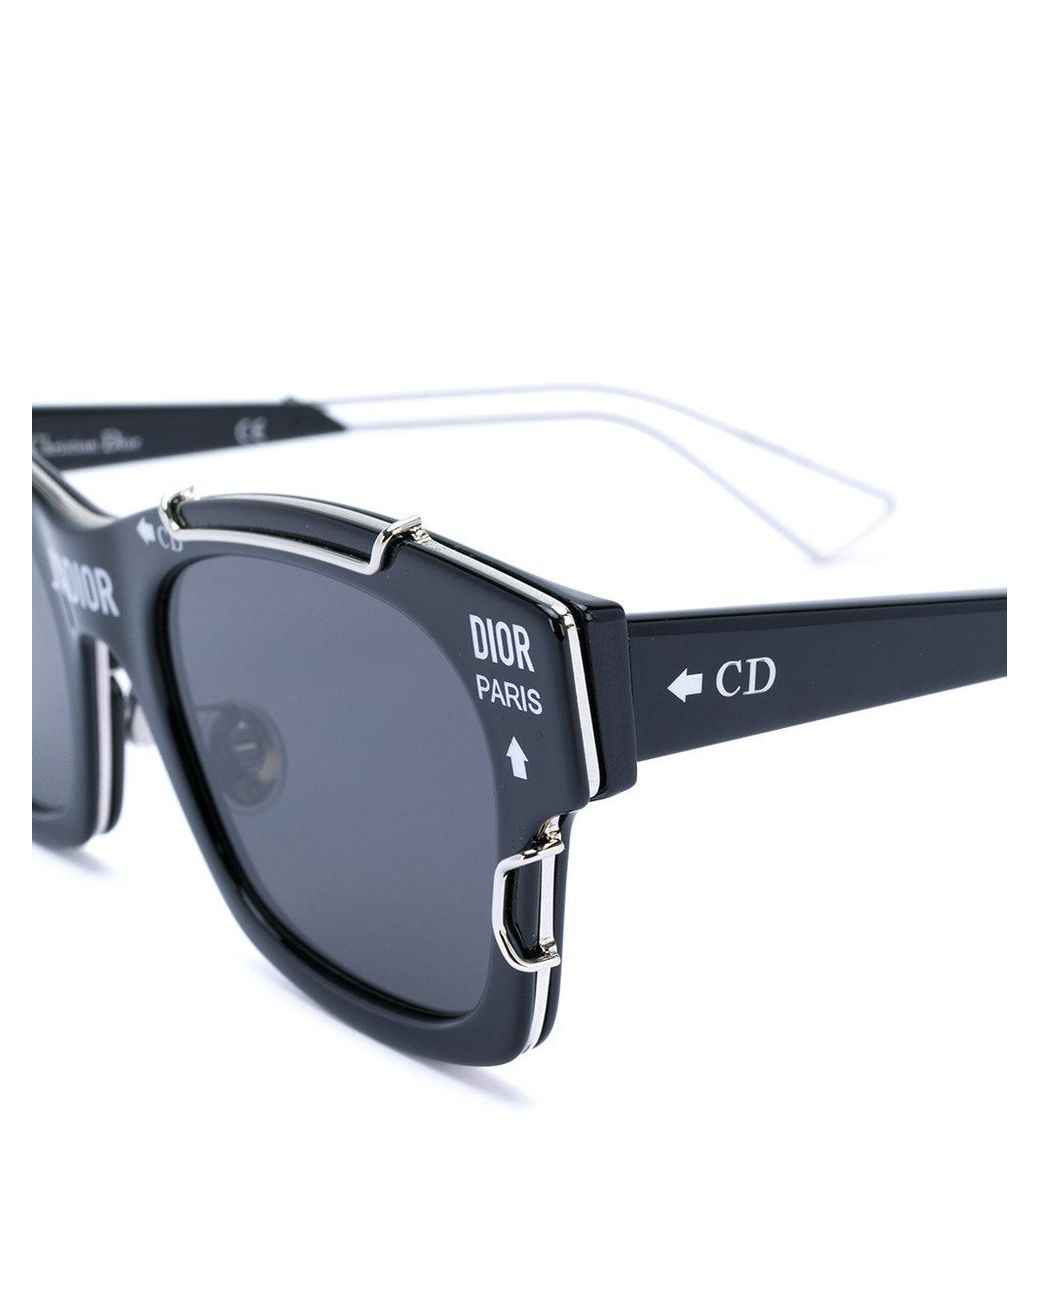 Christian Dior Jadior Sunglasses Sunglasses  Designer Exchange  Buy  Sell Exchange